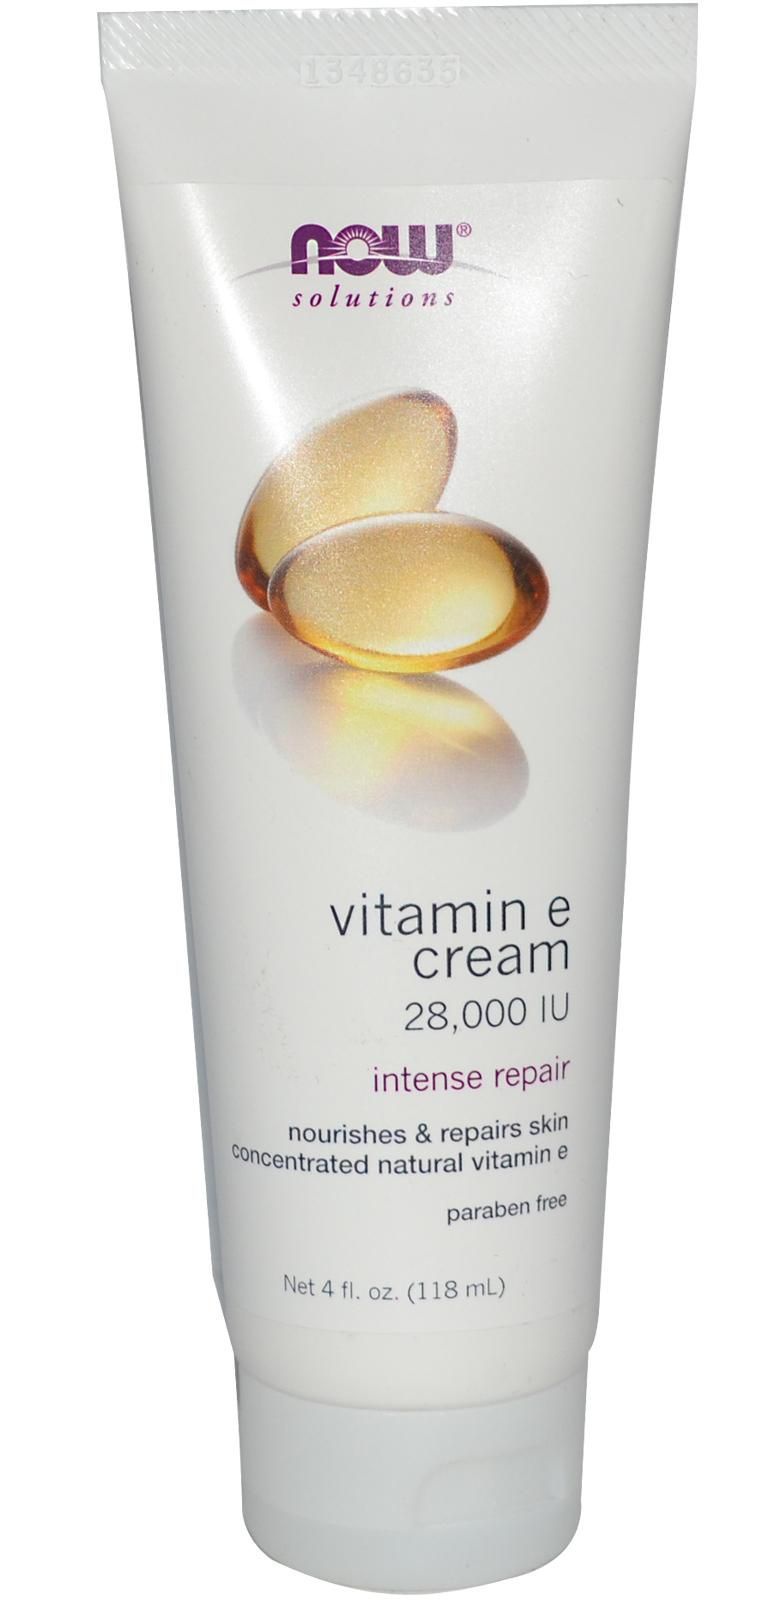 Now Foods Solutions Vitamin E Cream, 28,000 Iu